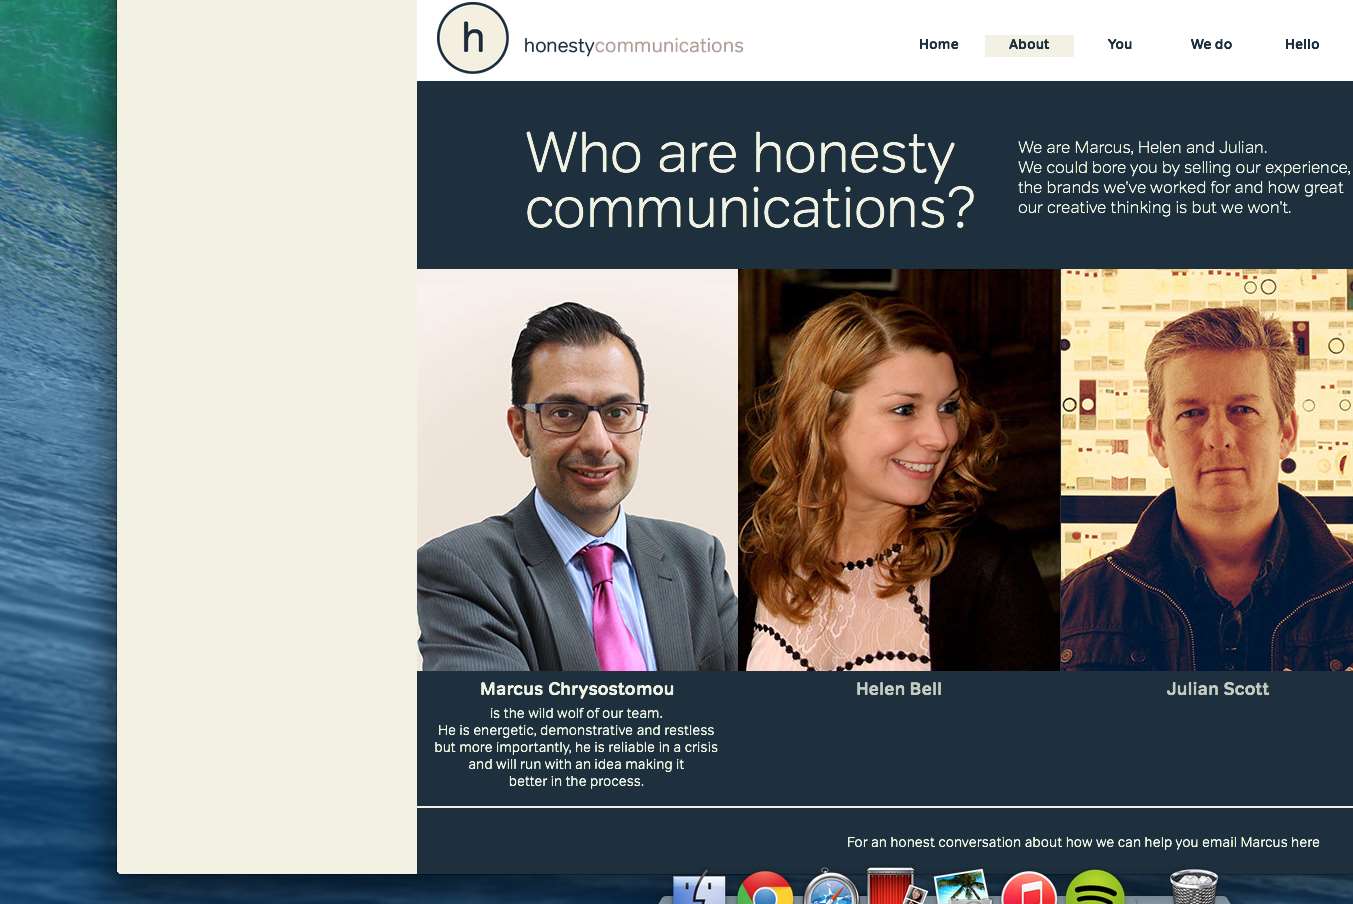 The Honesty Communications website